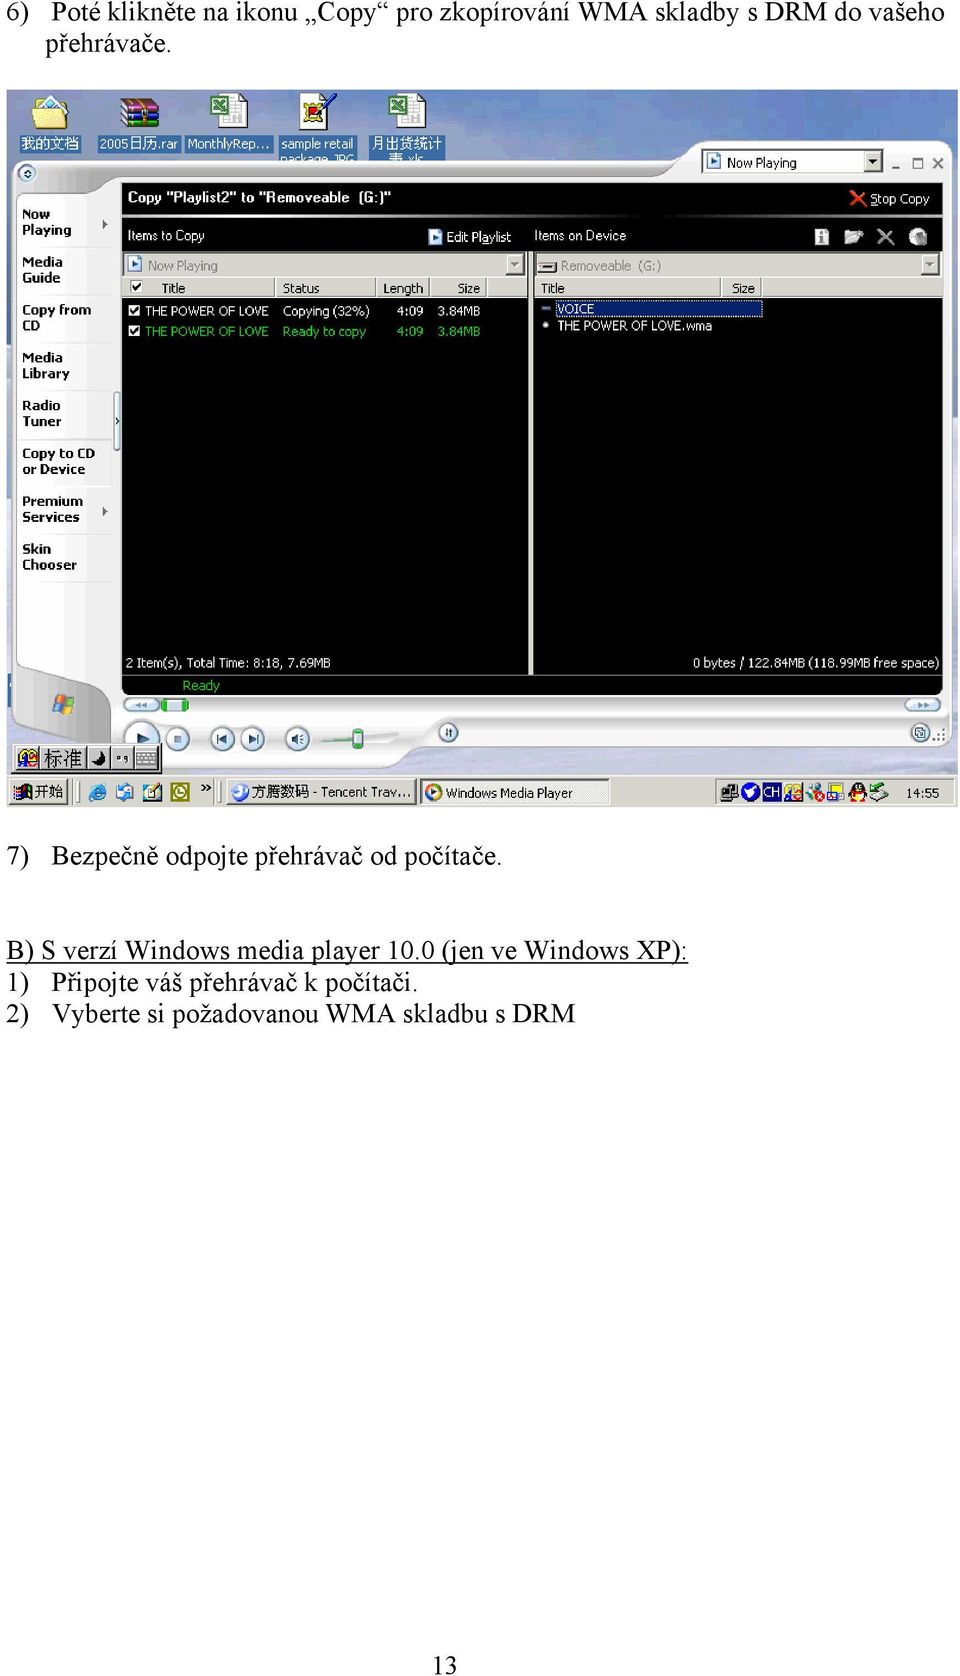 B) S verzí Windows media player 10.